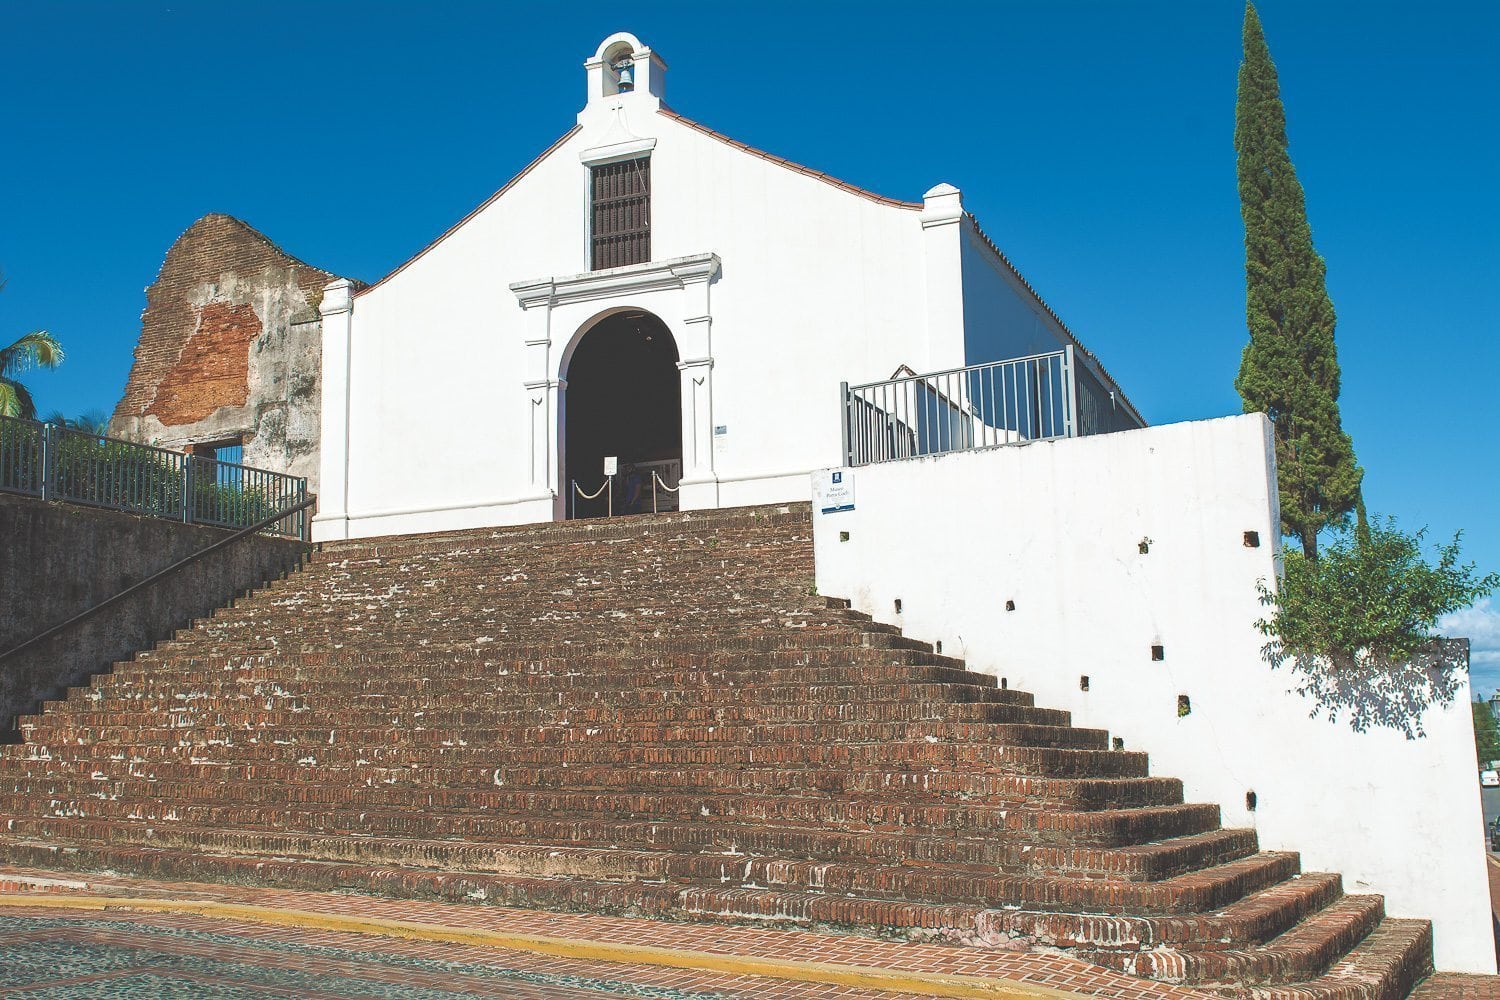 El Convento de Santo Domingo de Porta Coeli in Spanish, is one of the oldest church structures in the western hemisphere.